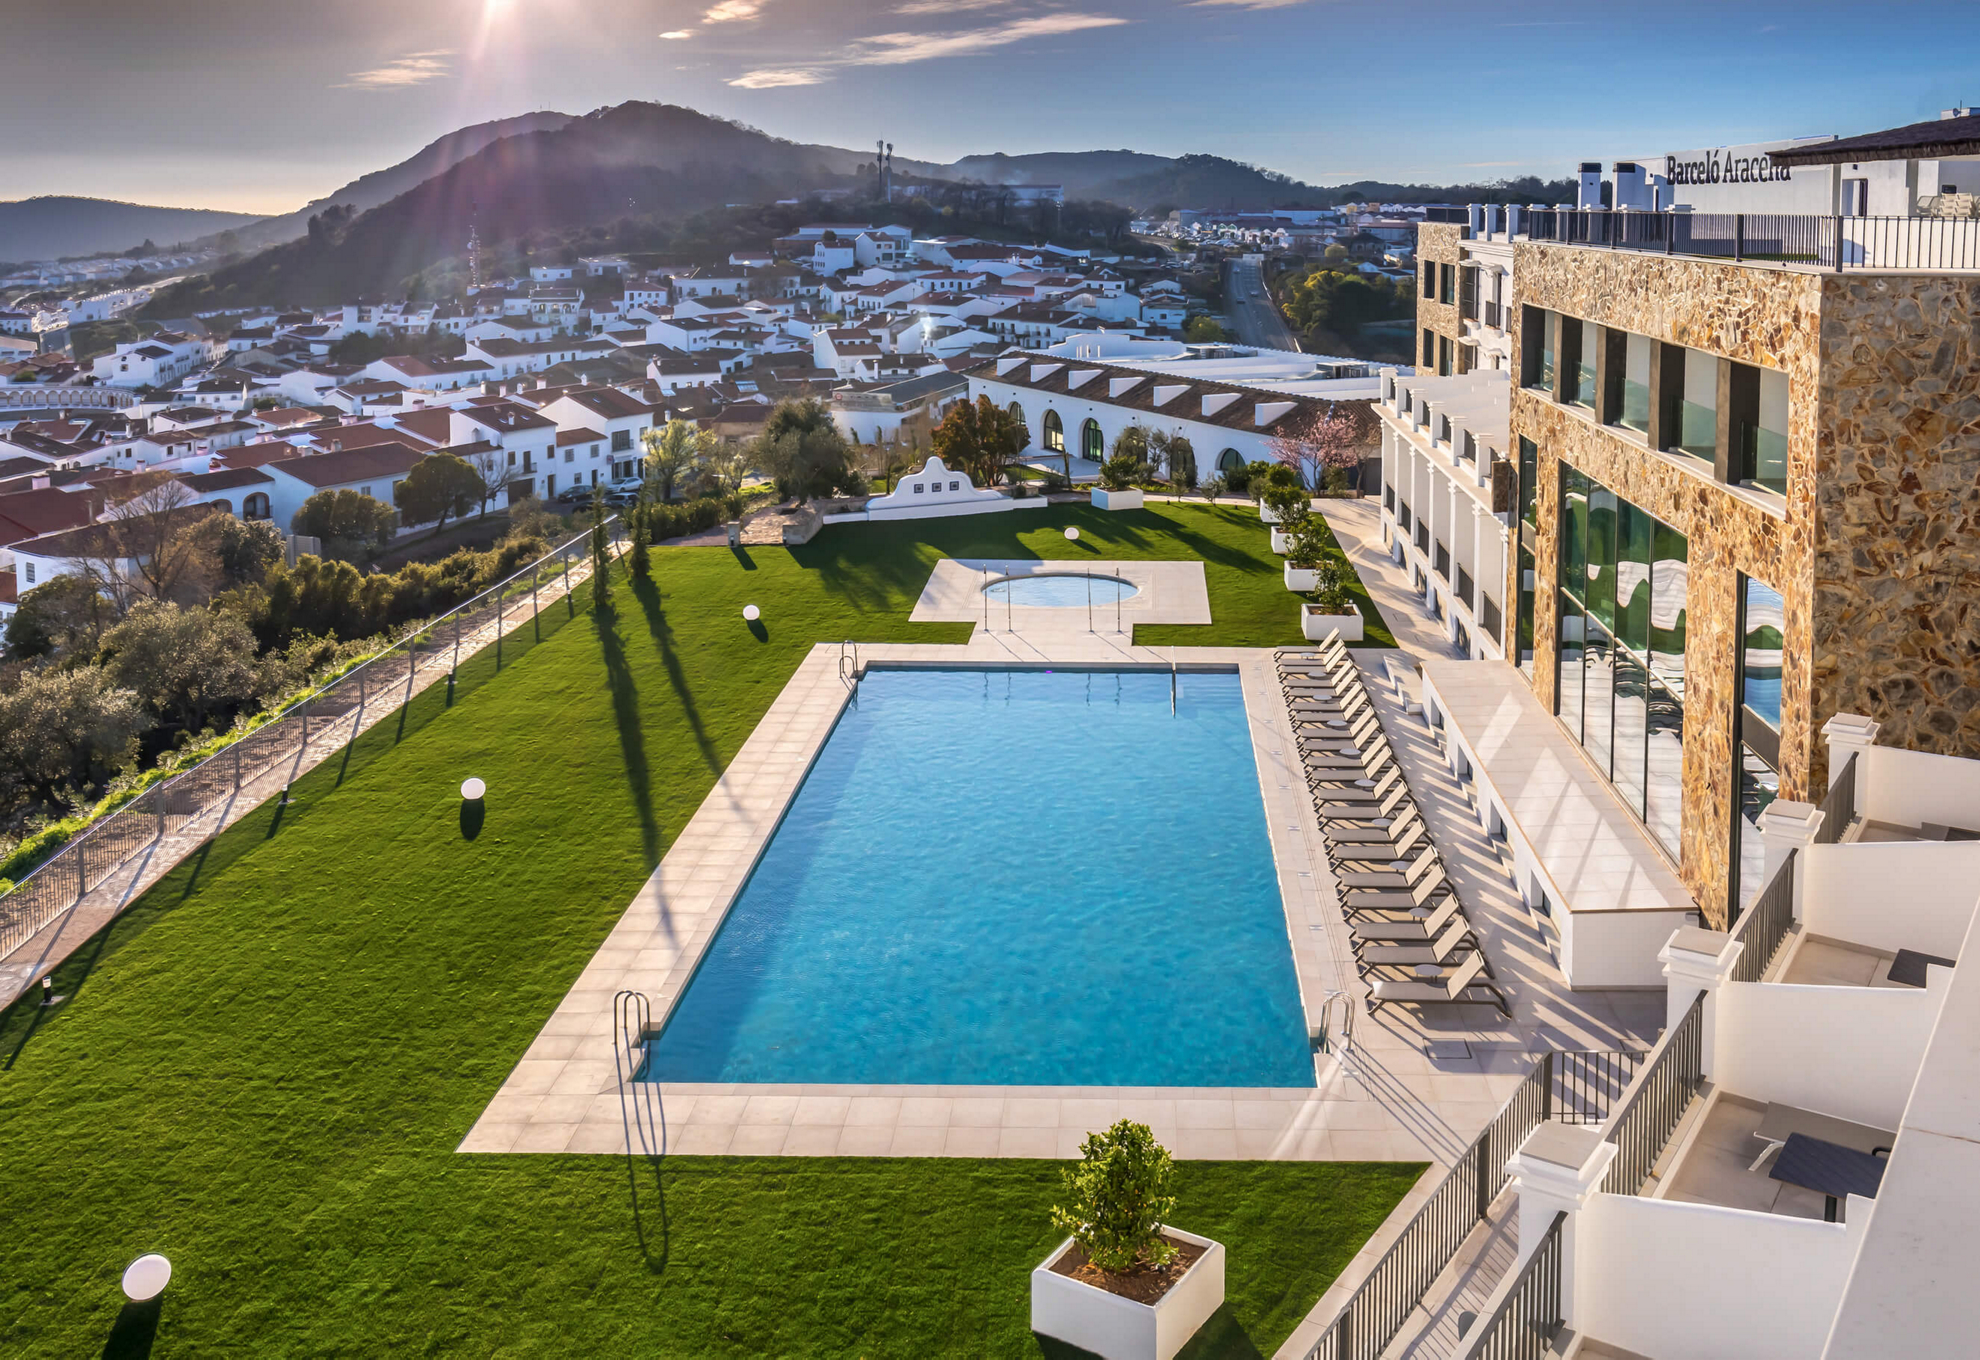 Best rural hotels in Spain: A view of the Barceló Aracena hotel & pool and the Sierra de Aracena